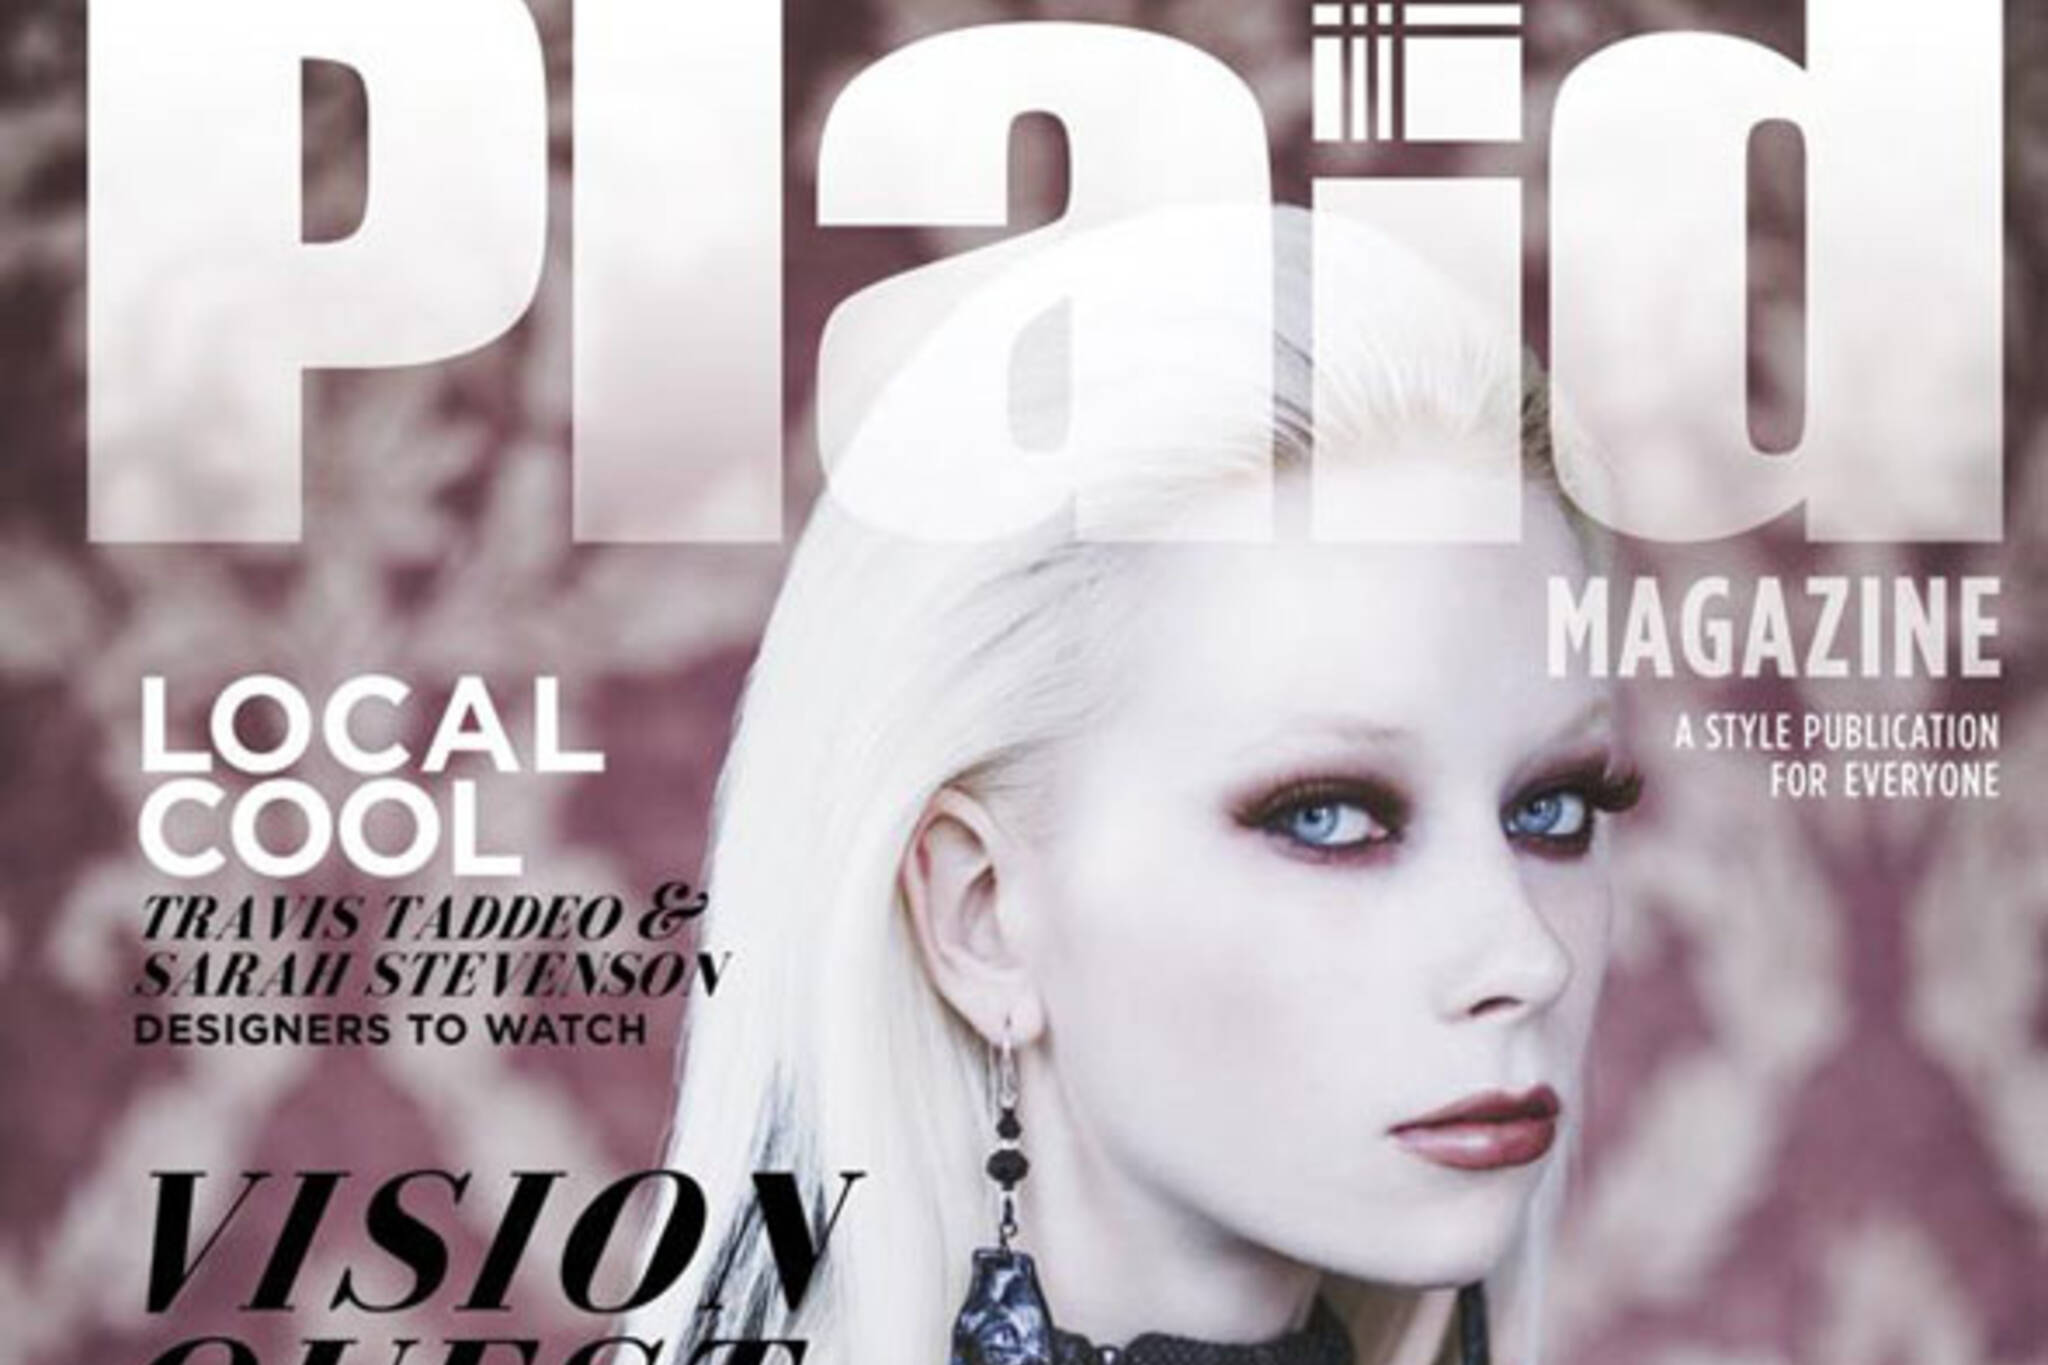 plaid magazine closing toronto